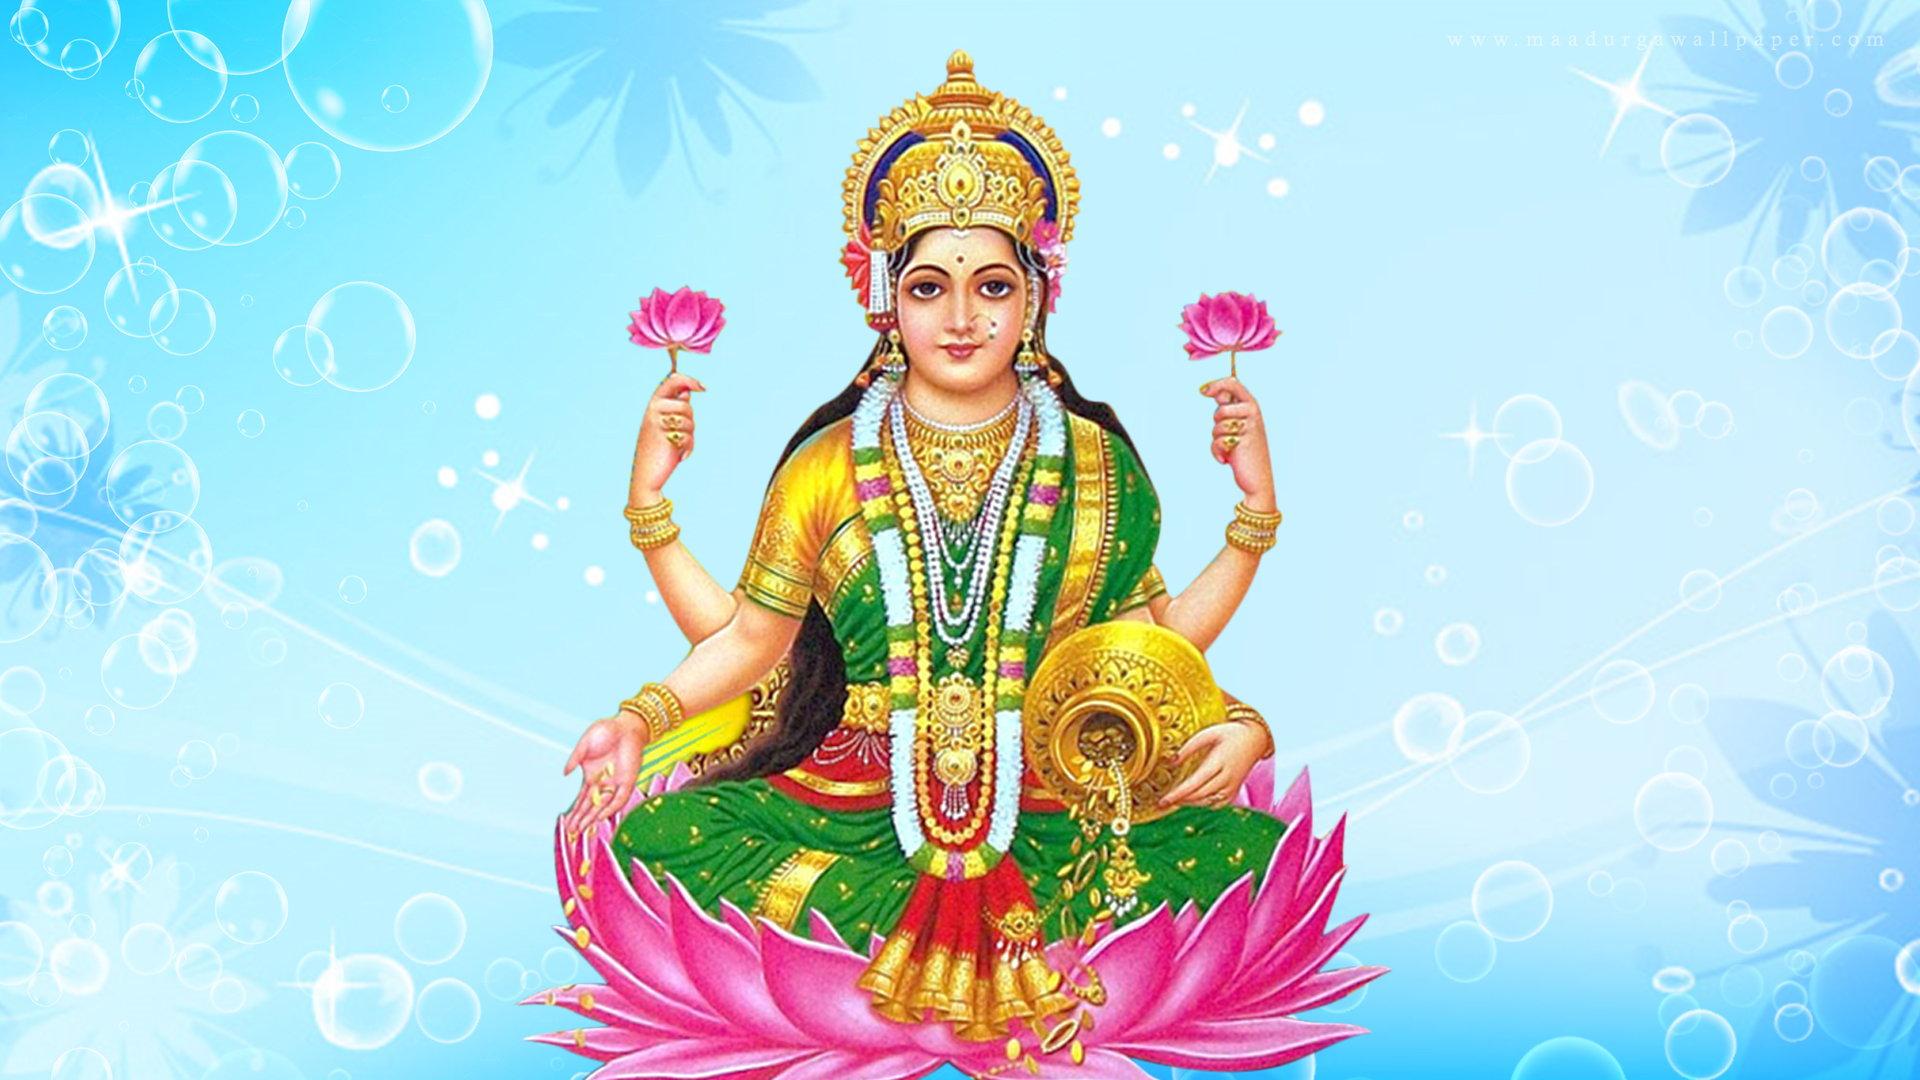 Download Free HD Wallpaper of Maa laxmi(lakshmi) Devi. Maa Laxmi